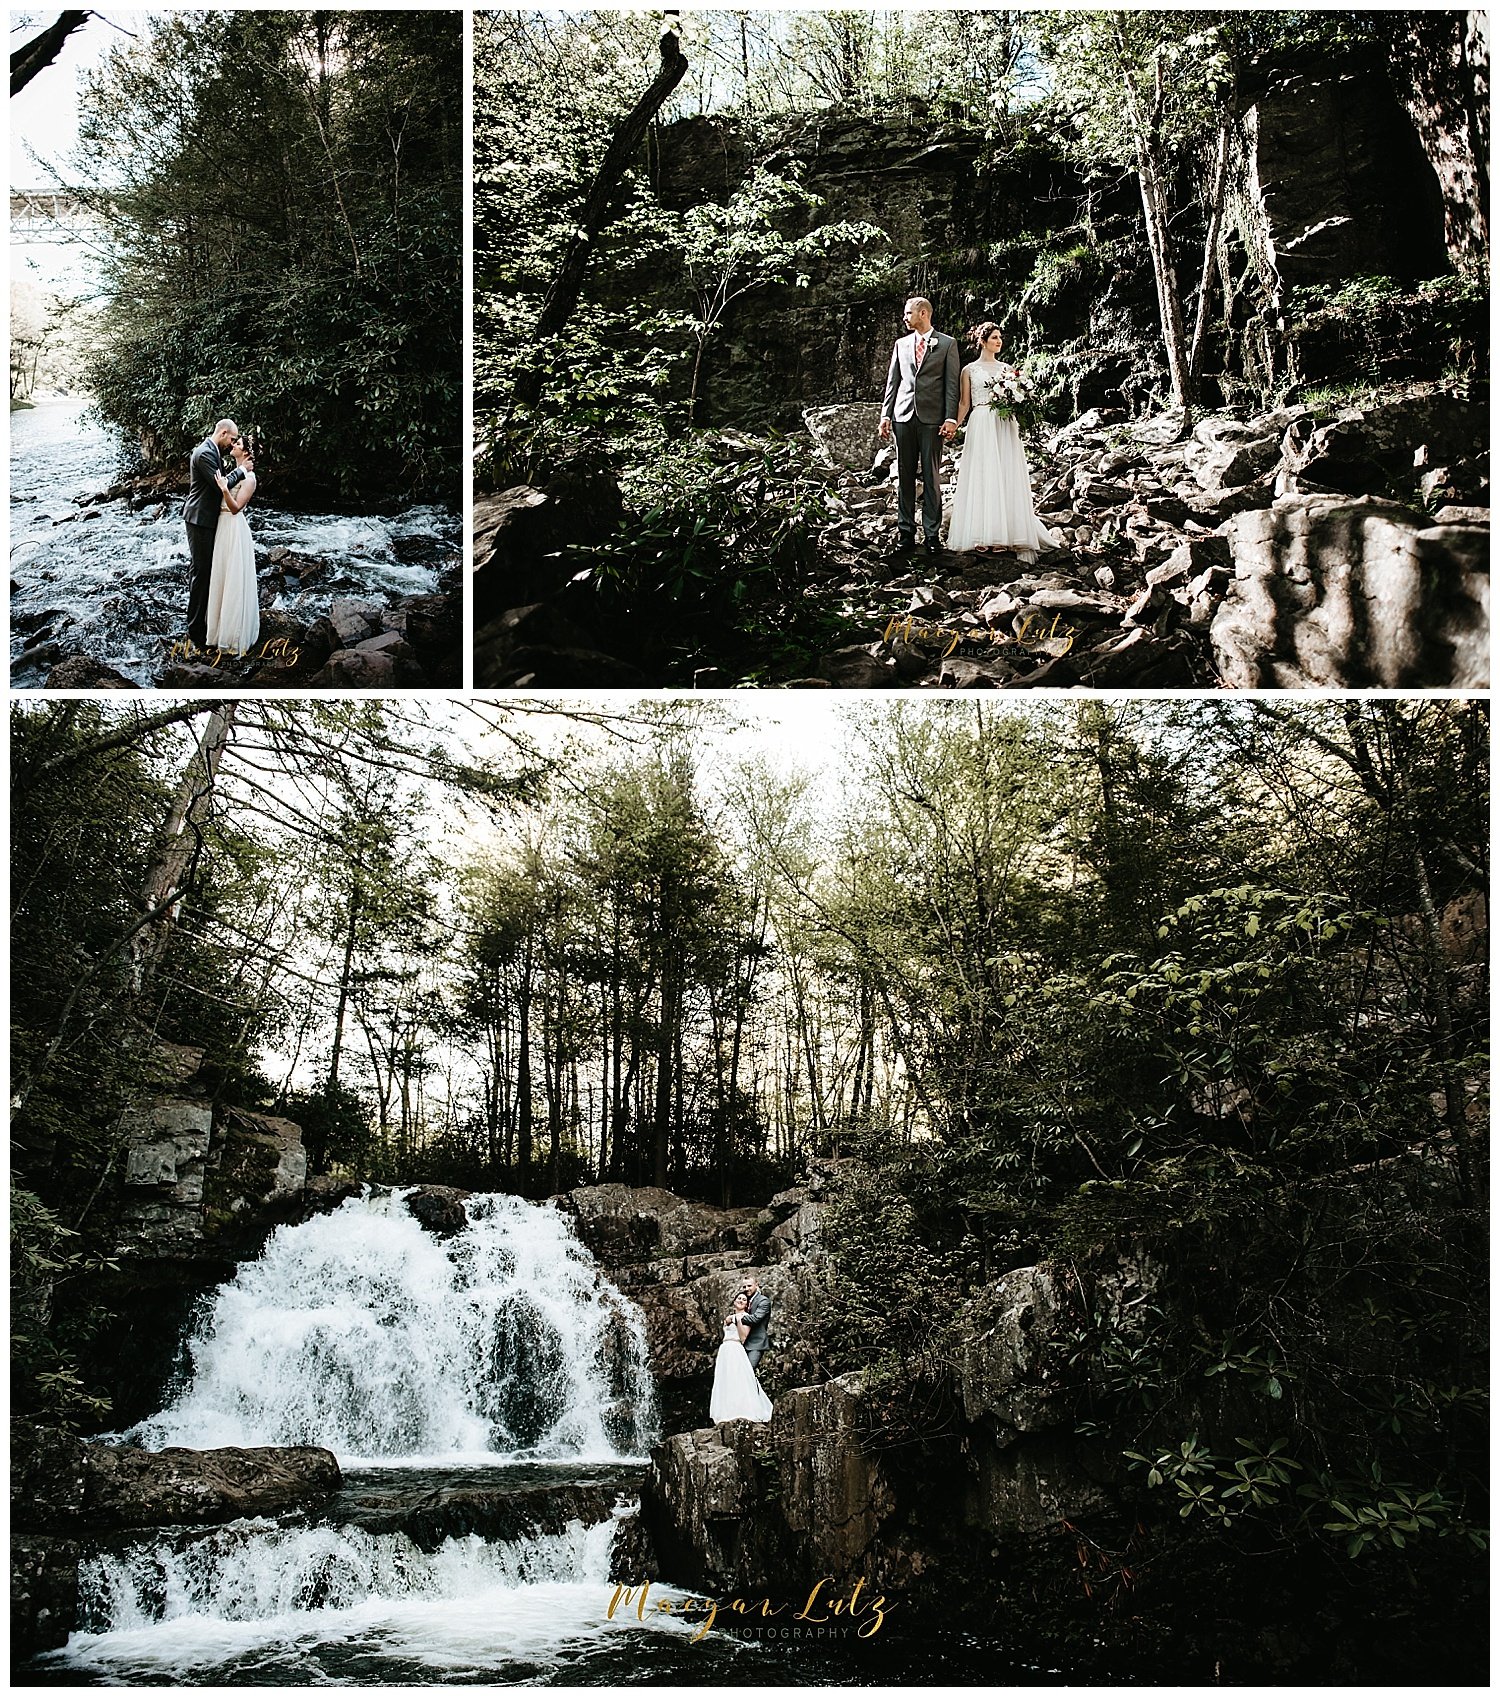 NEPA-wedding-photographer-elopement-at-hickory-run-hawk-falls-waterfall_0014.jpg